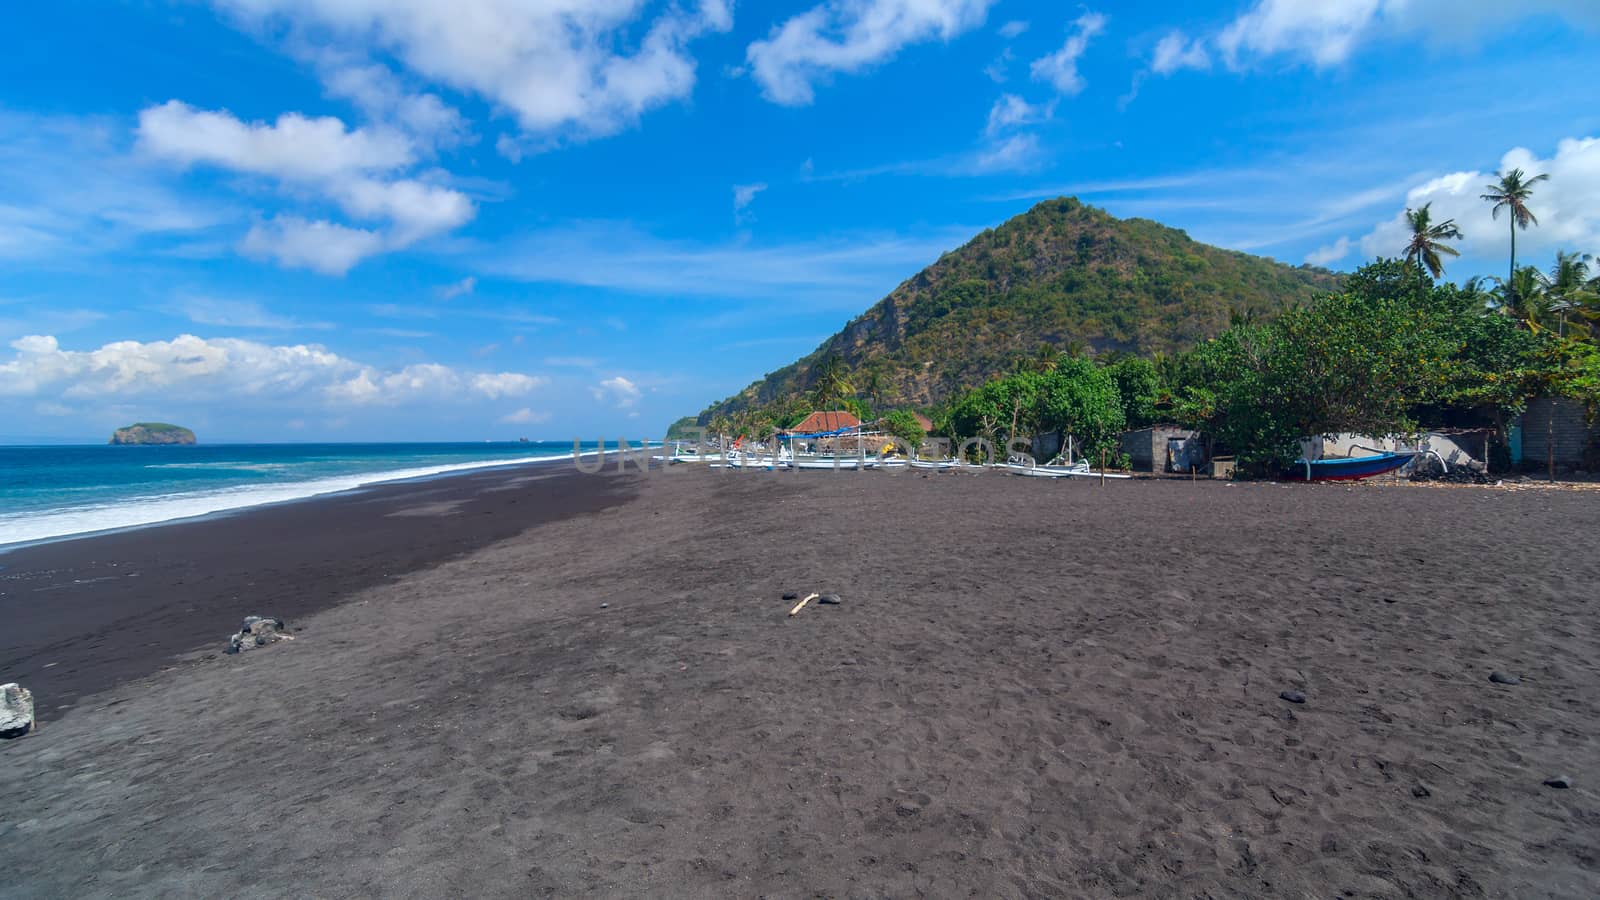 Beach of black sand on the island of Bali in Indonesia by BIG_TAU